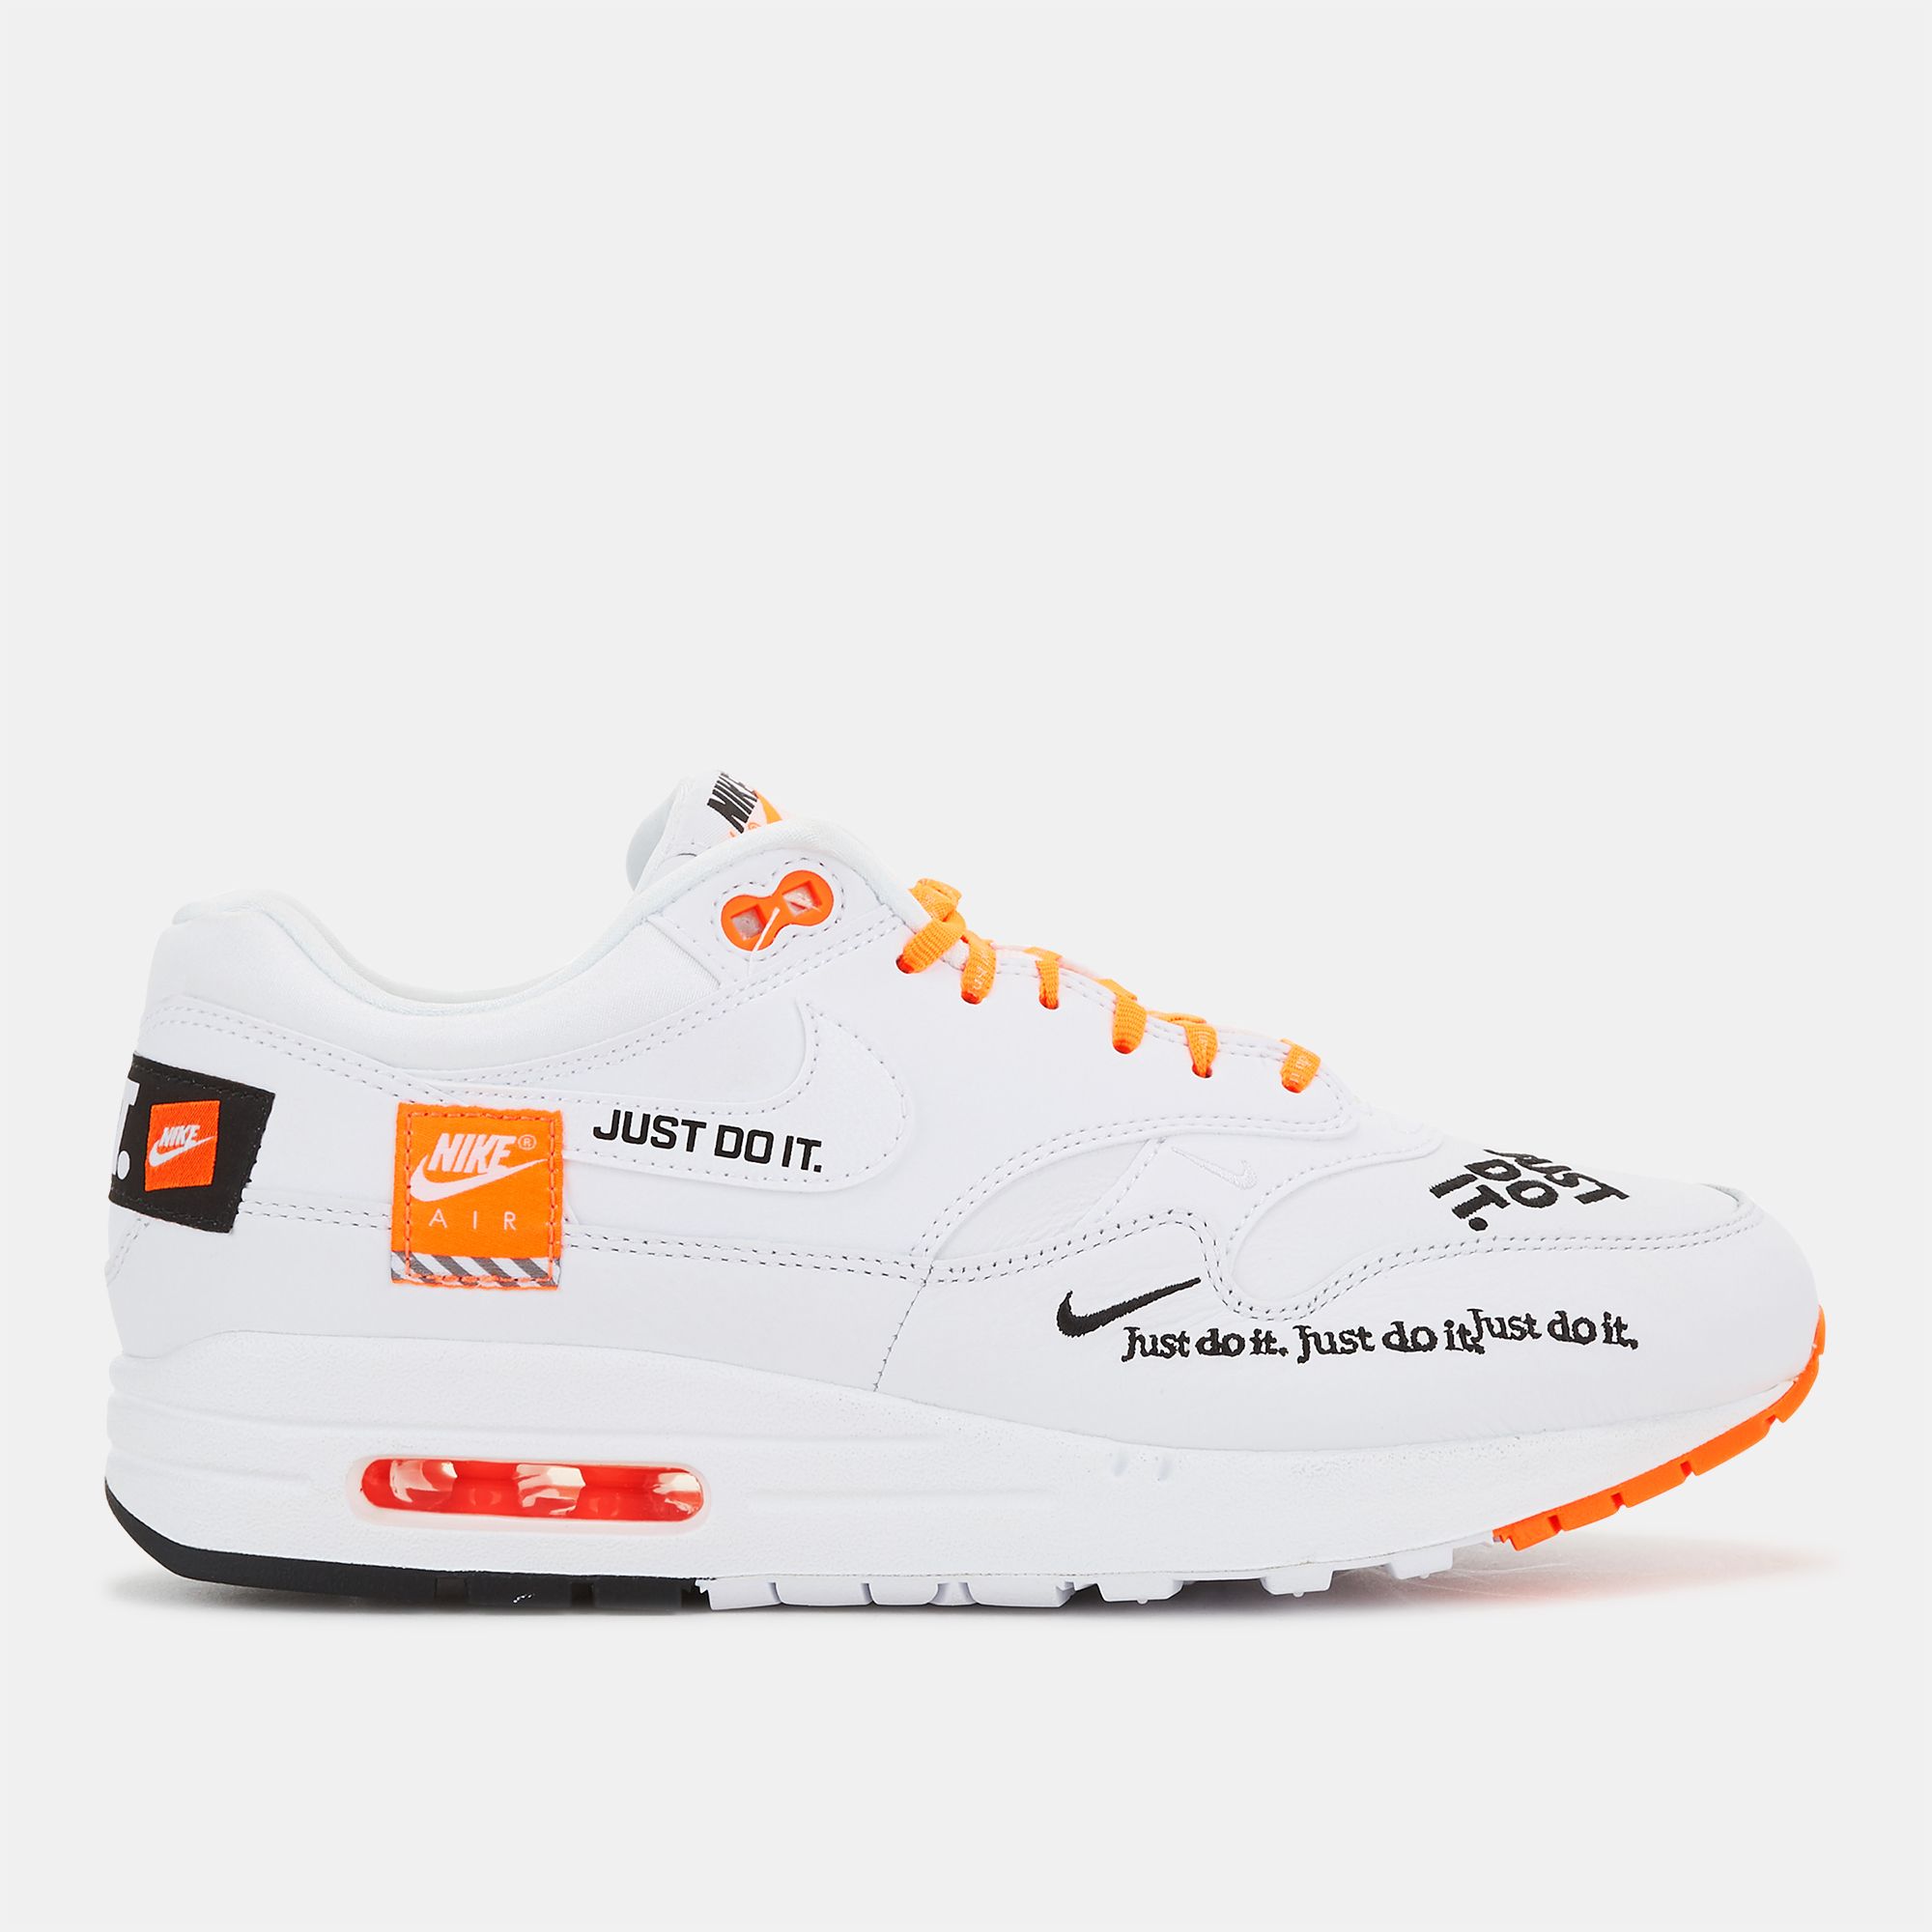 Buy Nike Air Max 1 “Just Do It” Shoe Online in Dubai, UAE | SSS